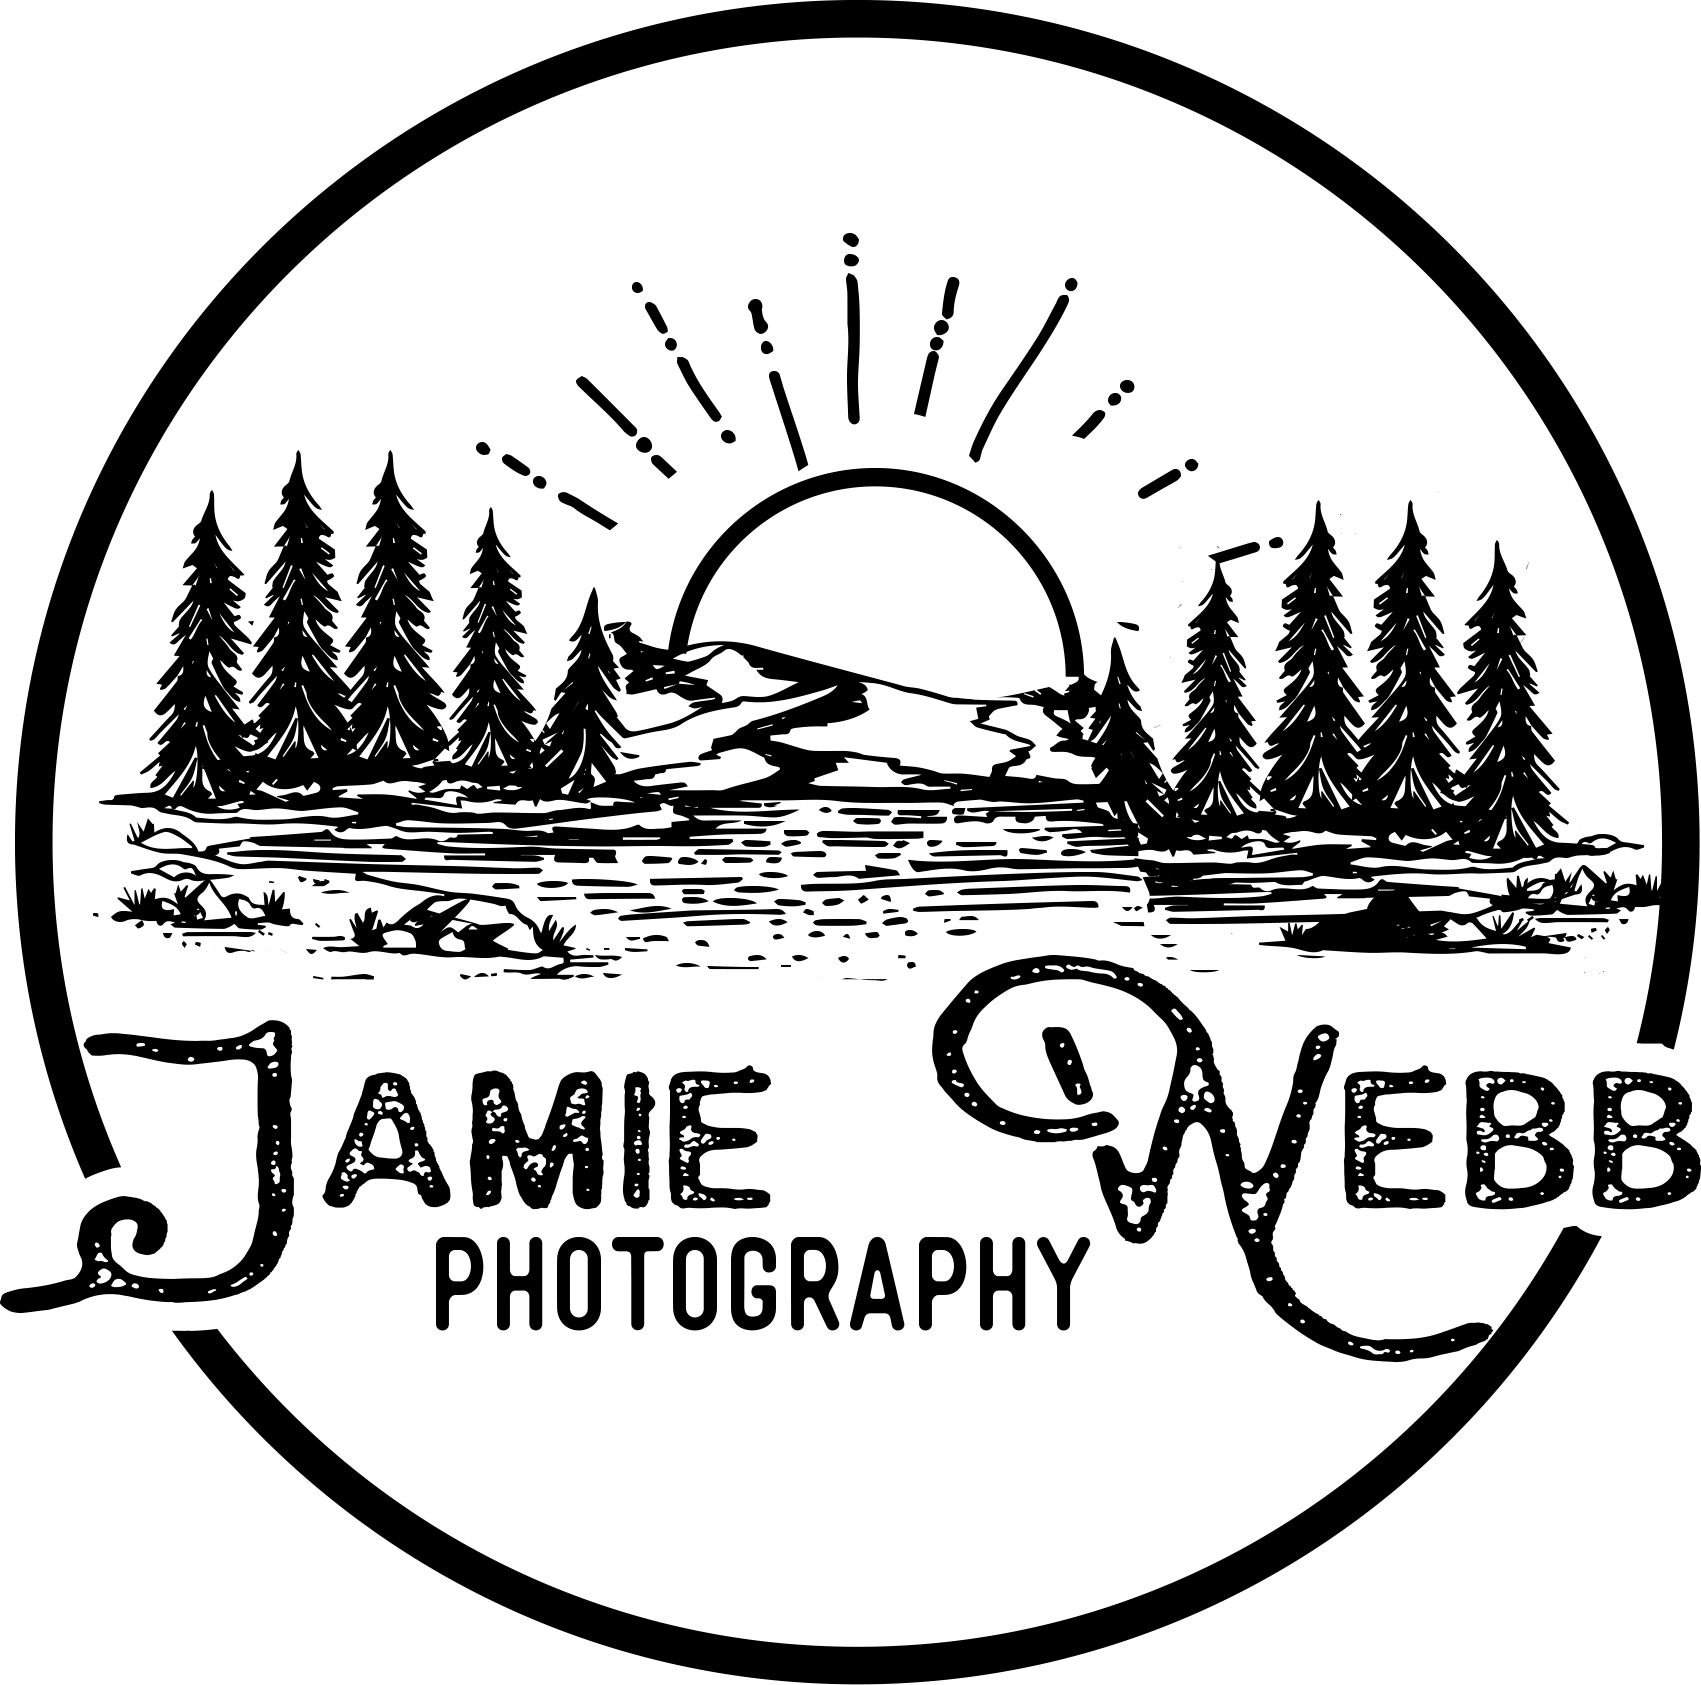 Jamie Webb Photography